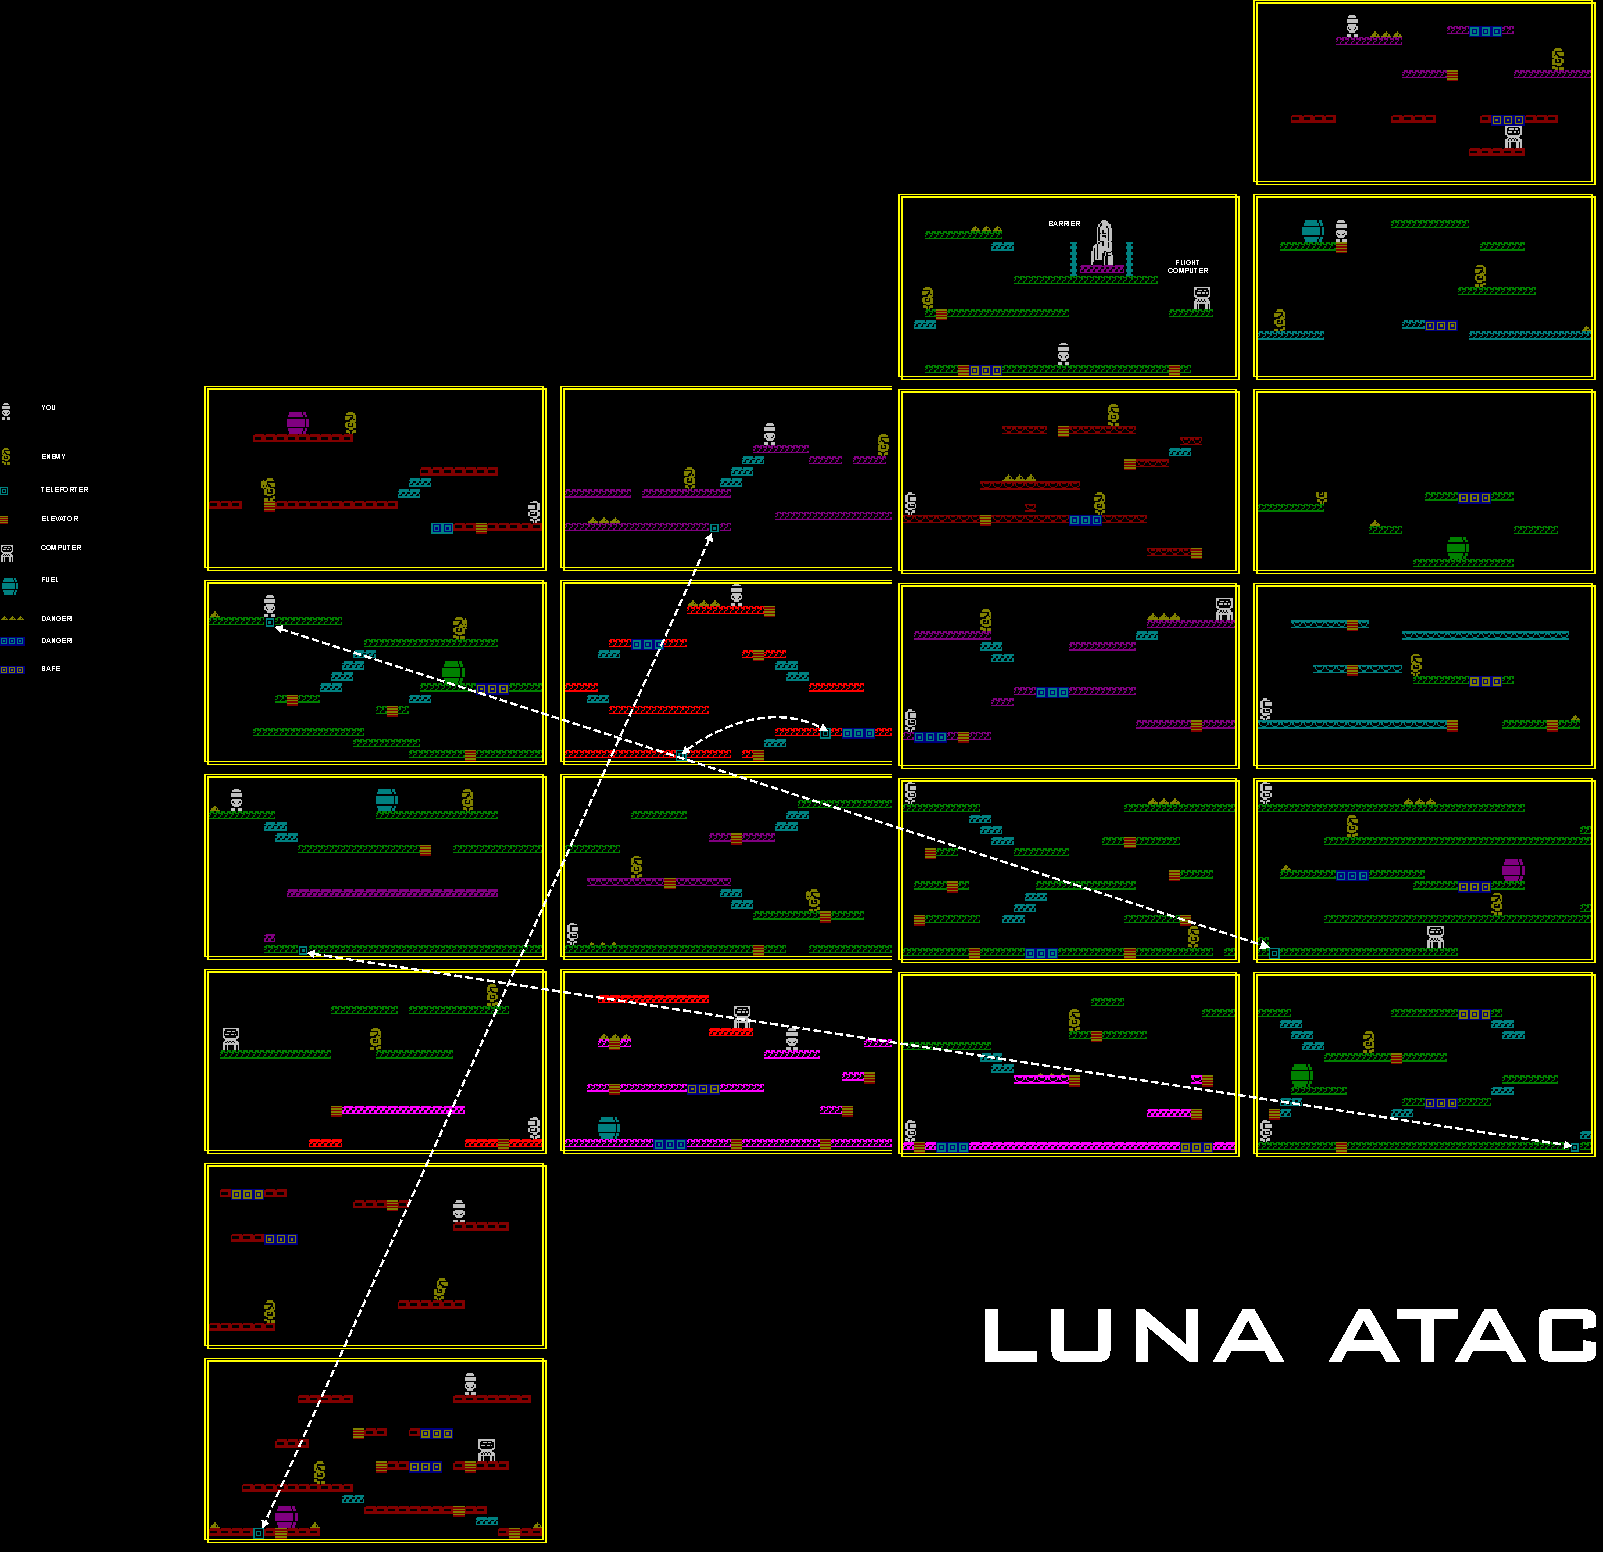 Luna Atac - The Map